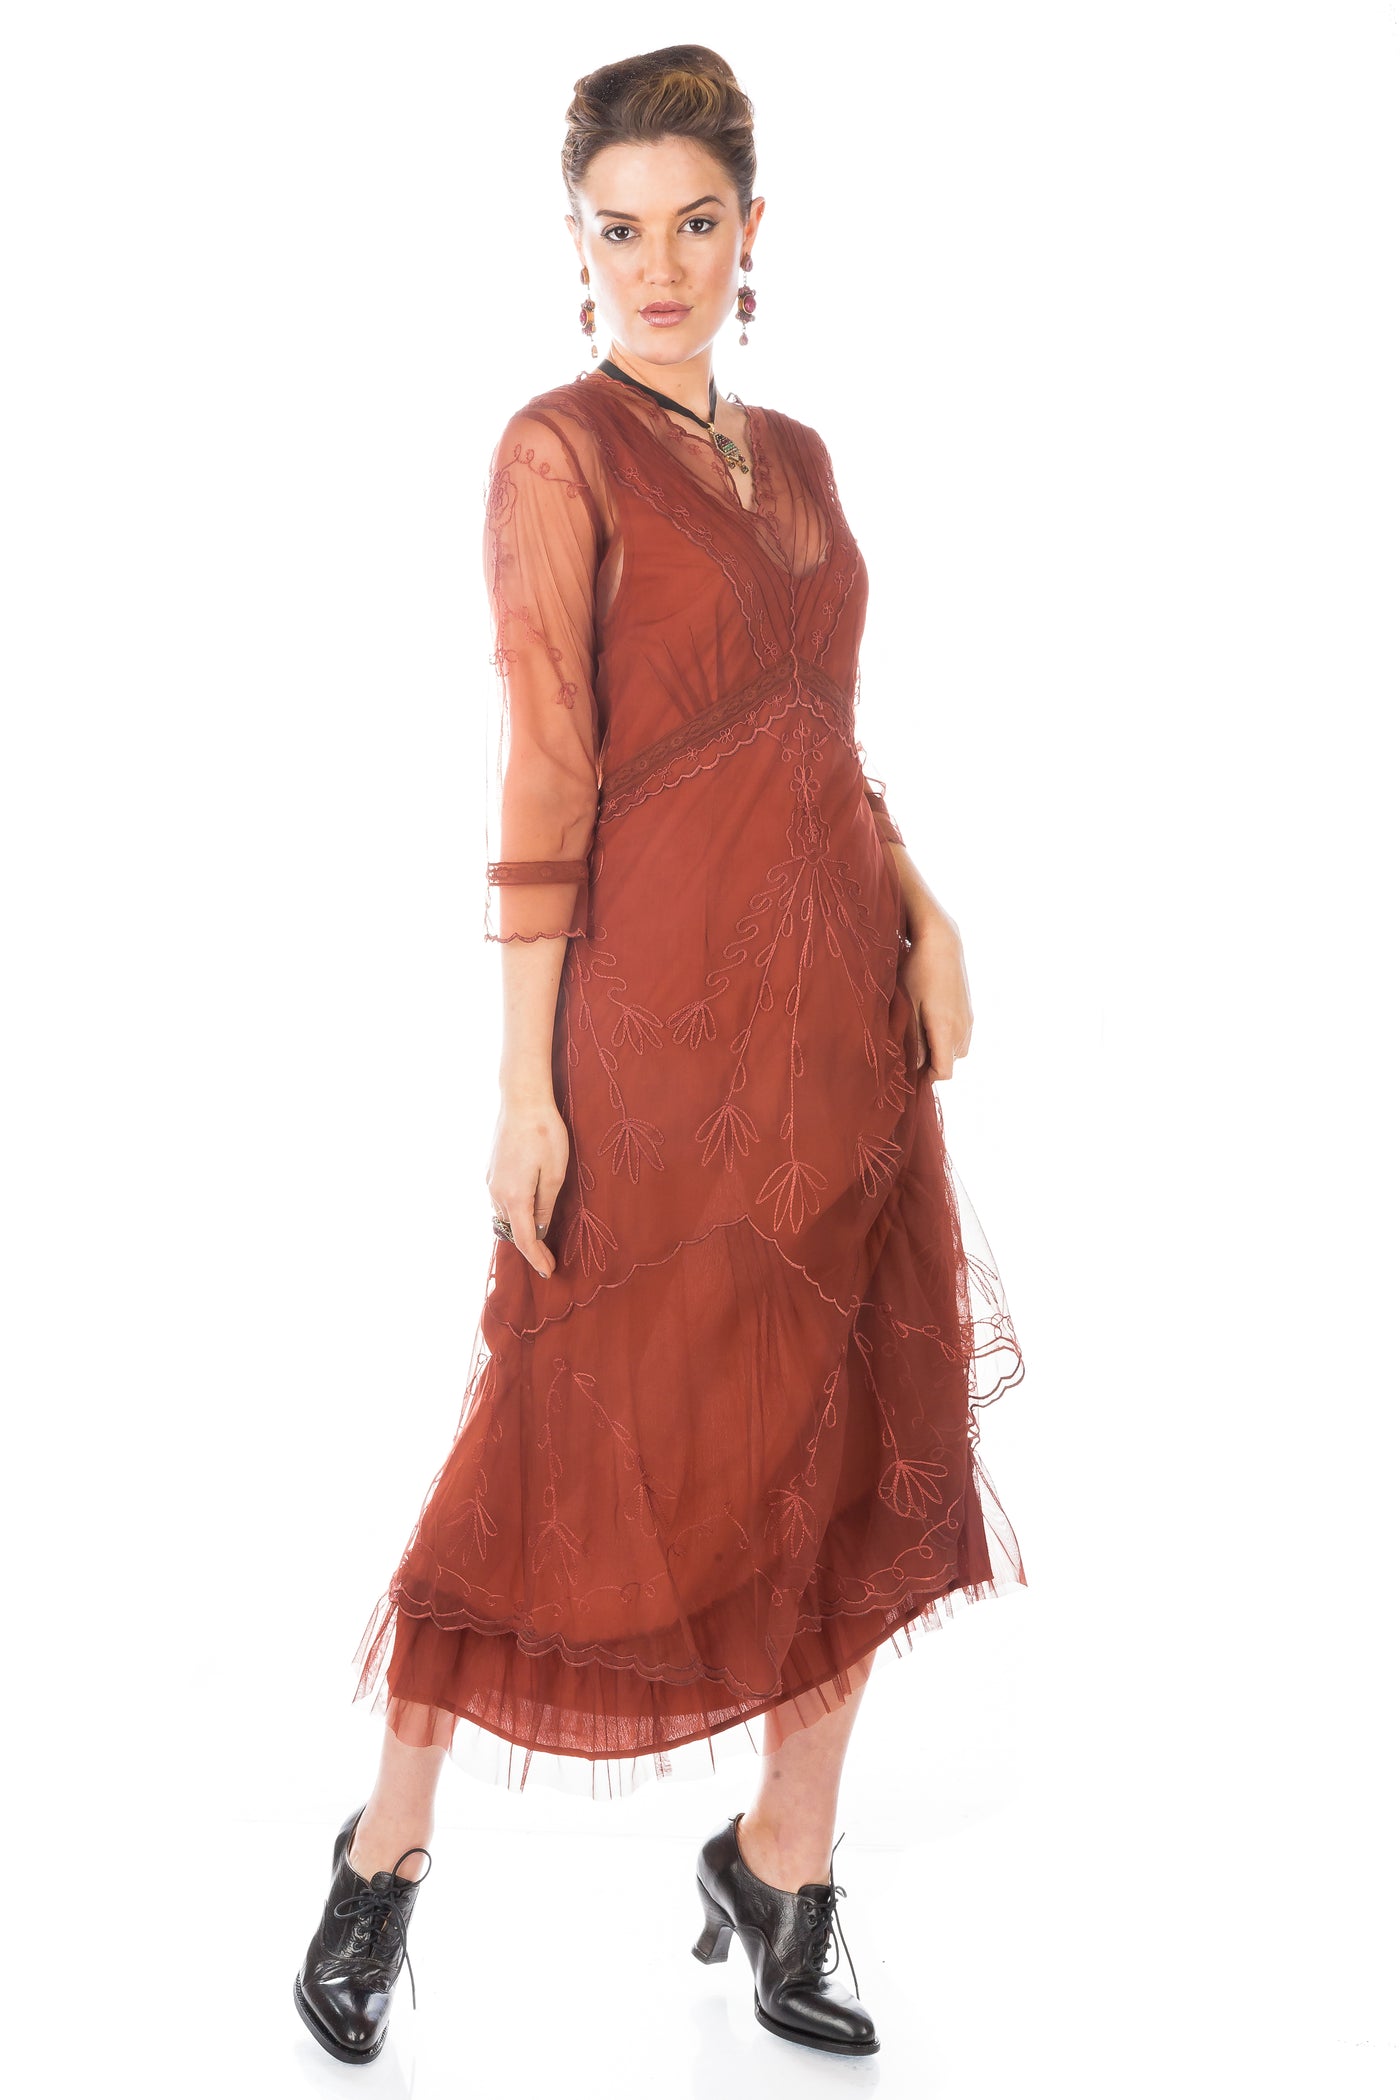 Nataya Sophia CL-509 Paprika Dress